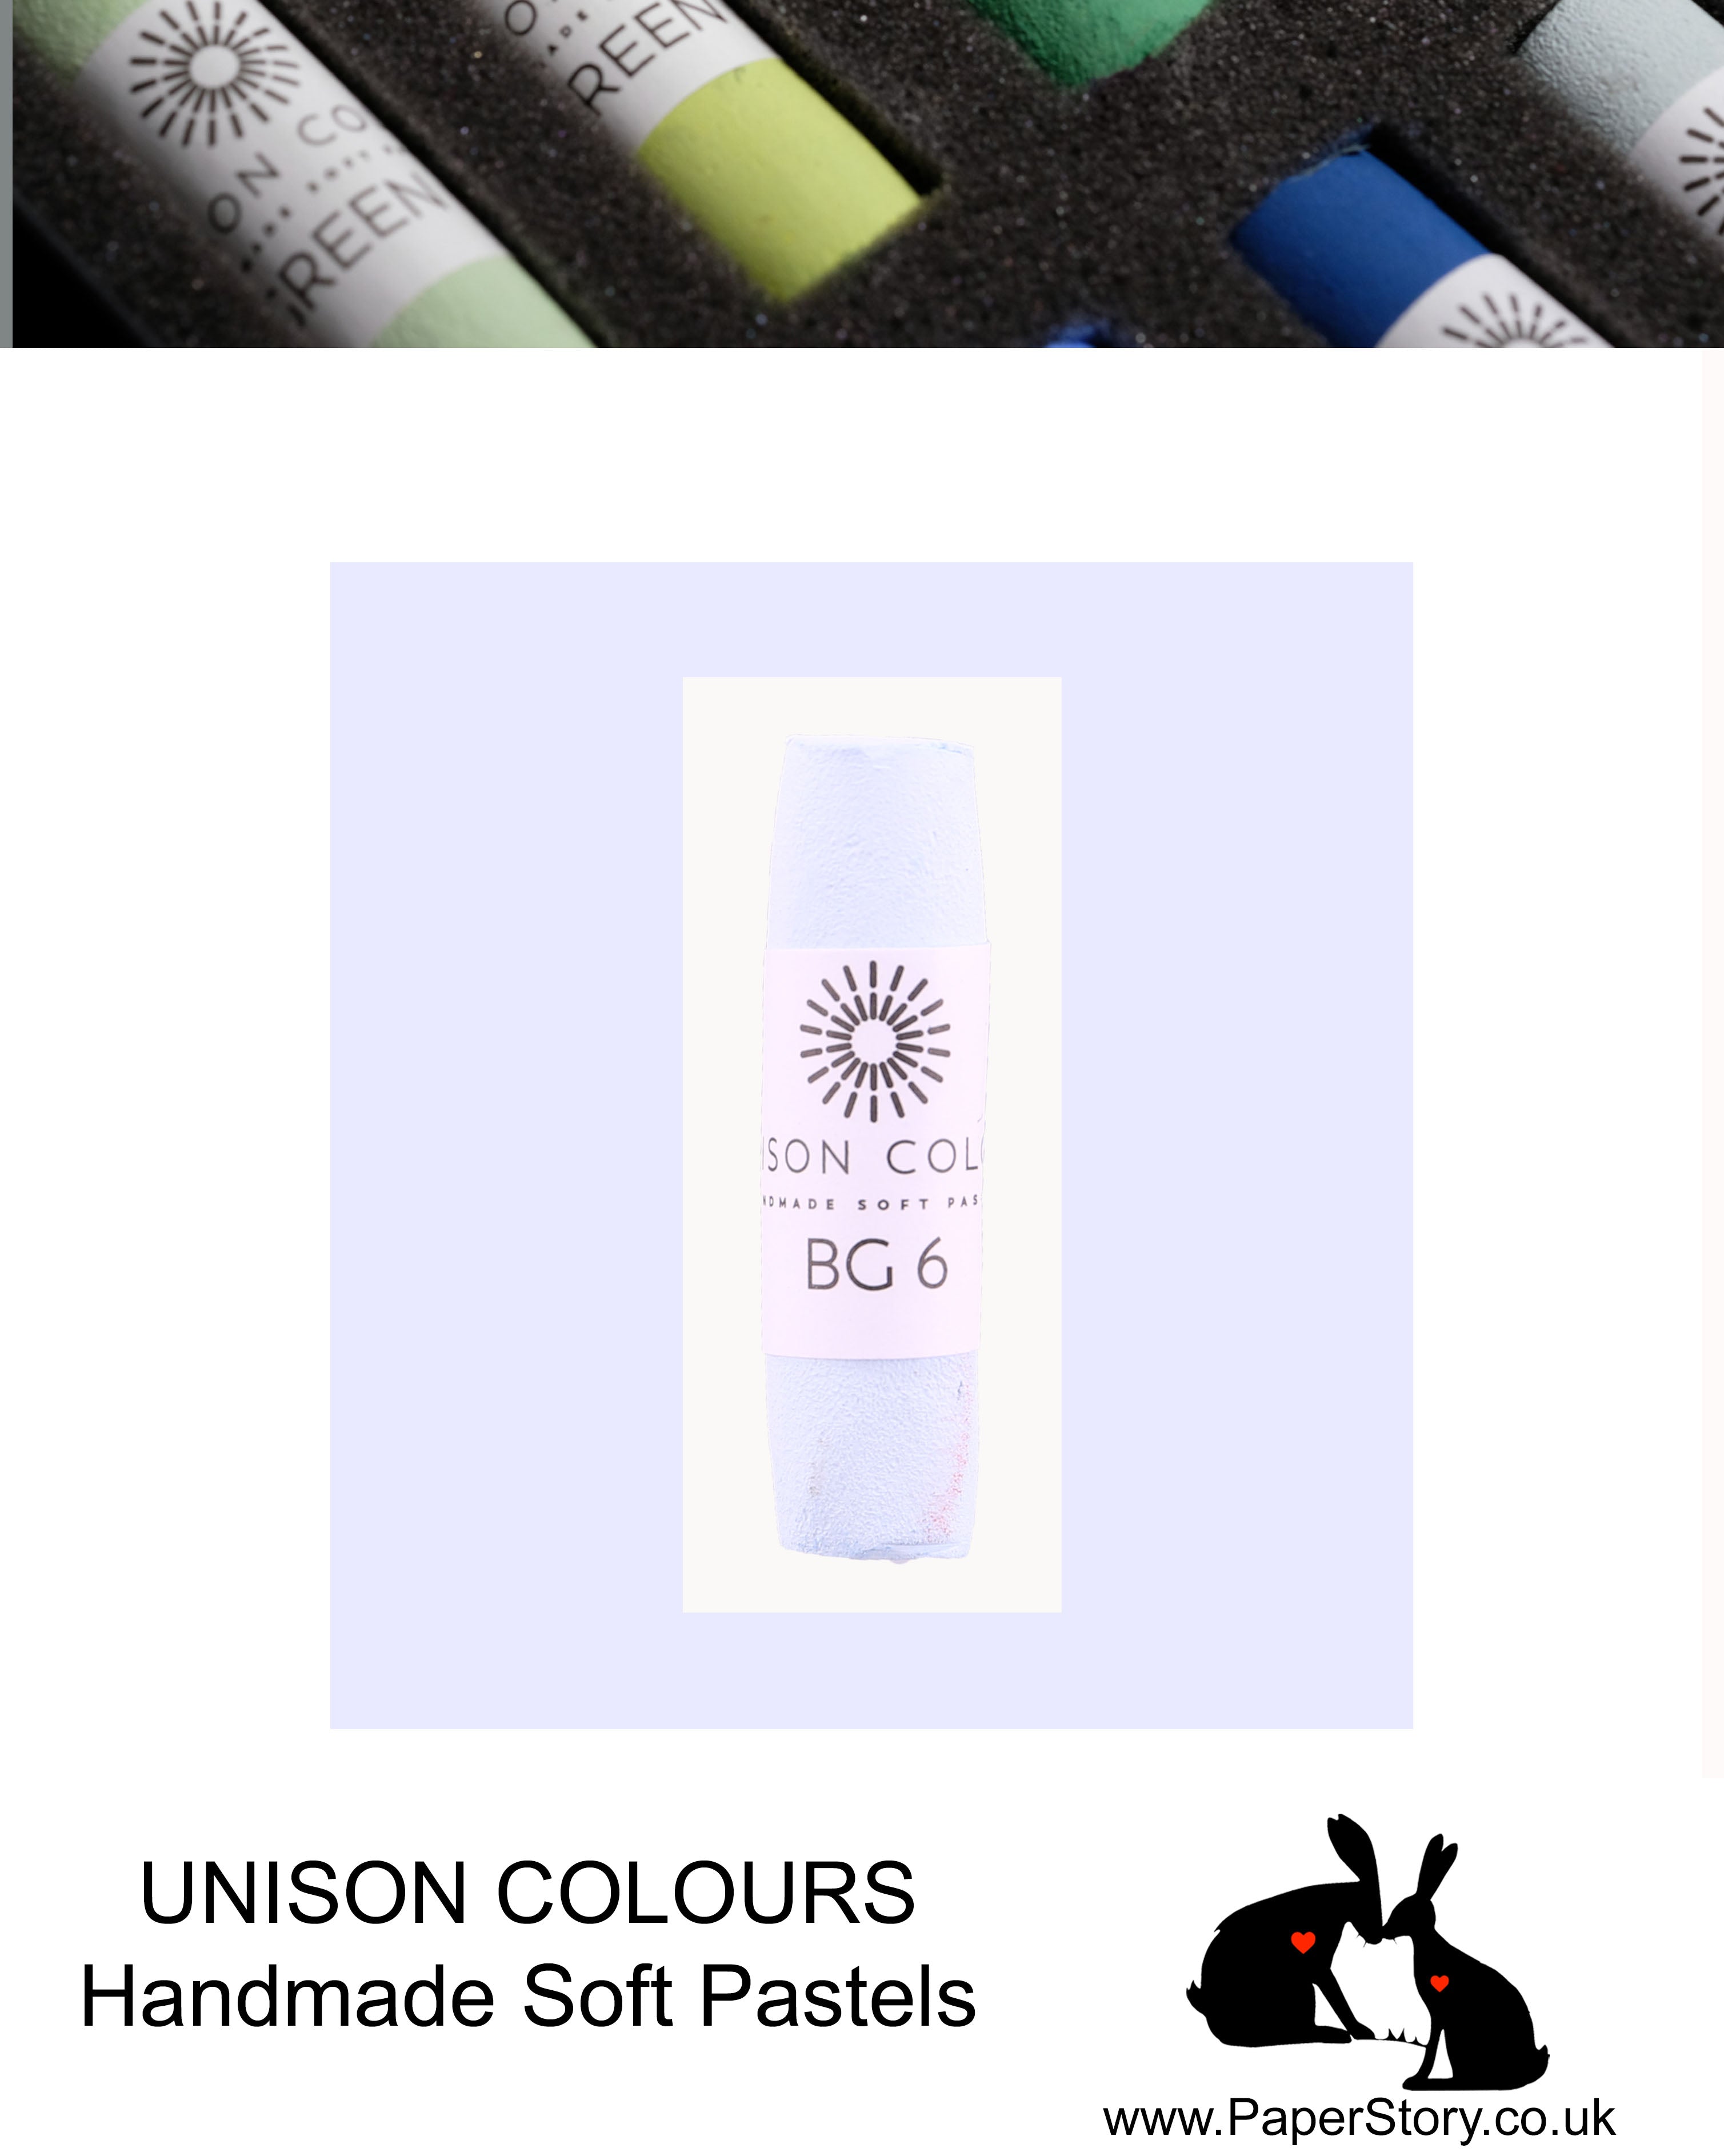 Unison Colour Handmade Soft Pastels Blue Green 06 - Size Regular